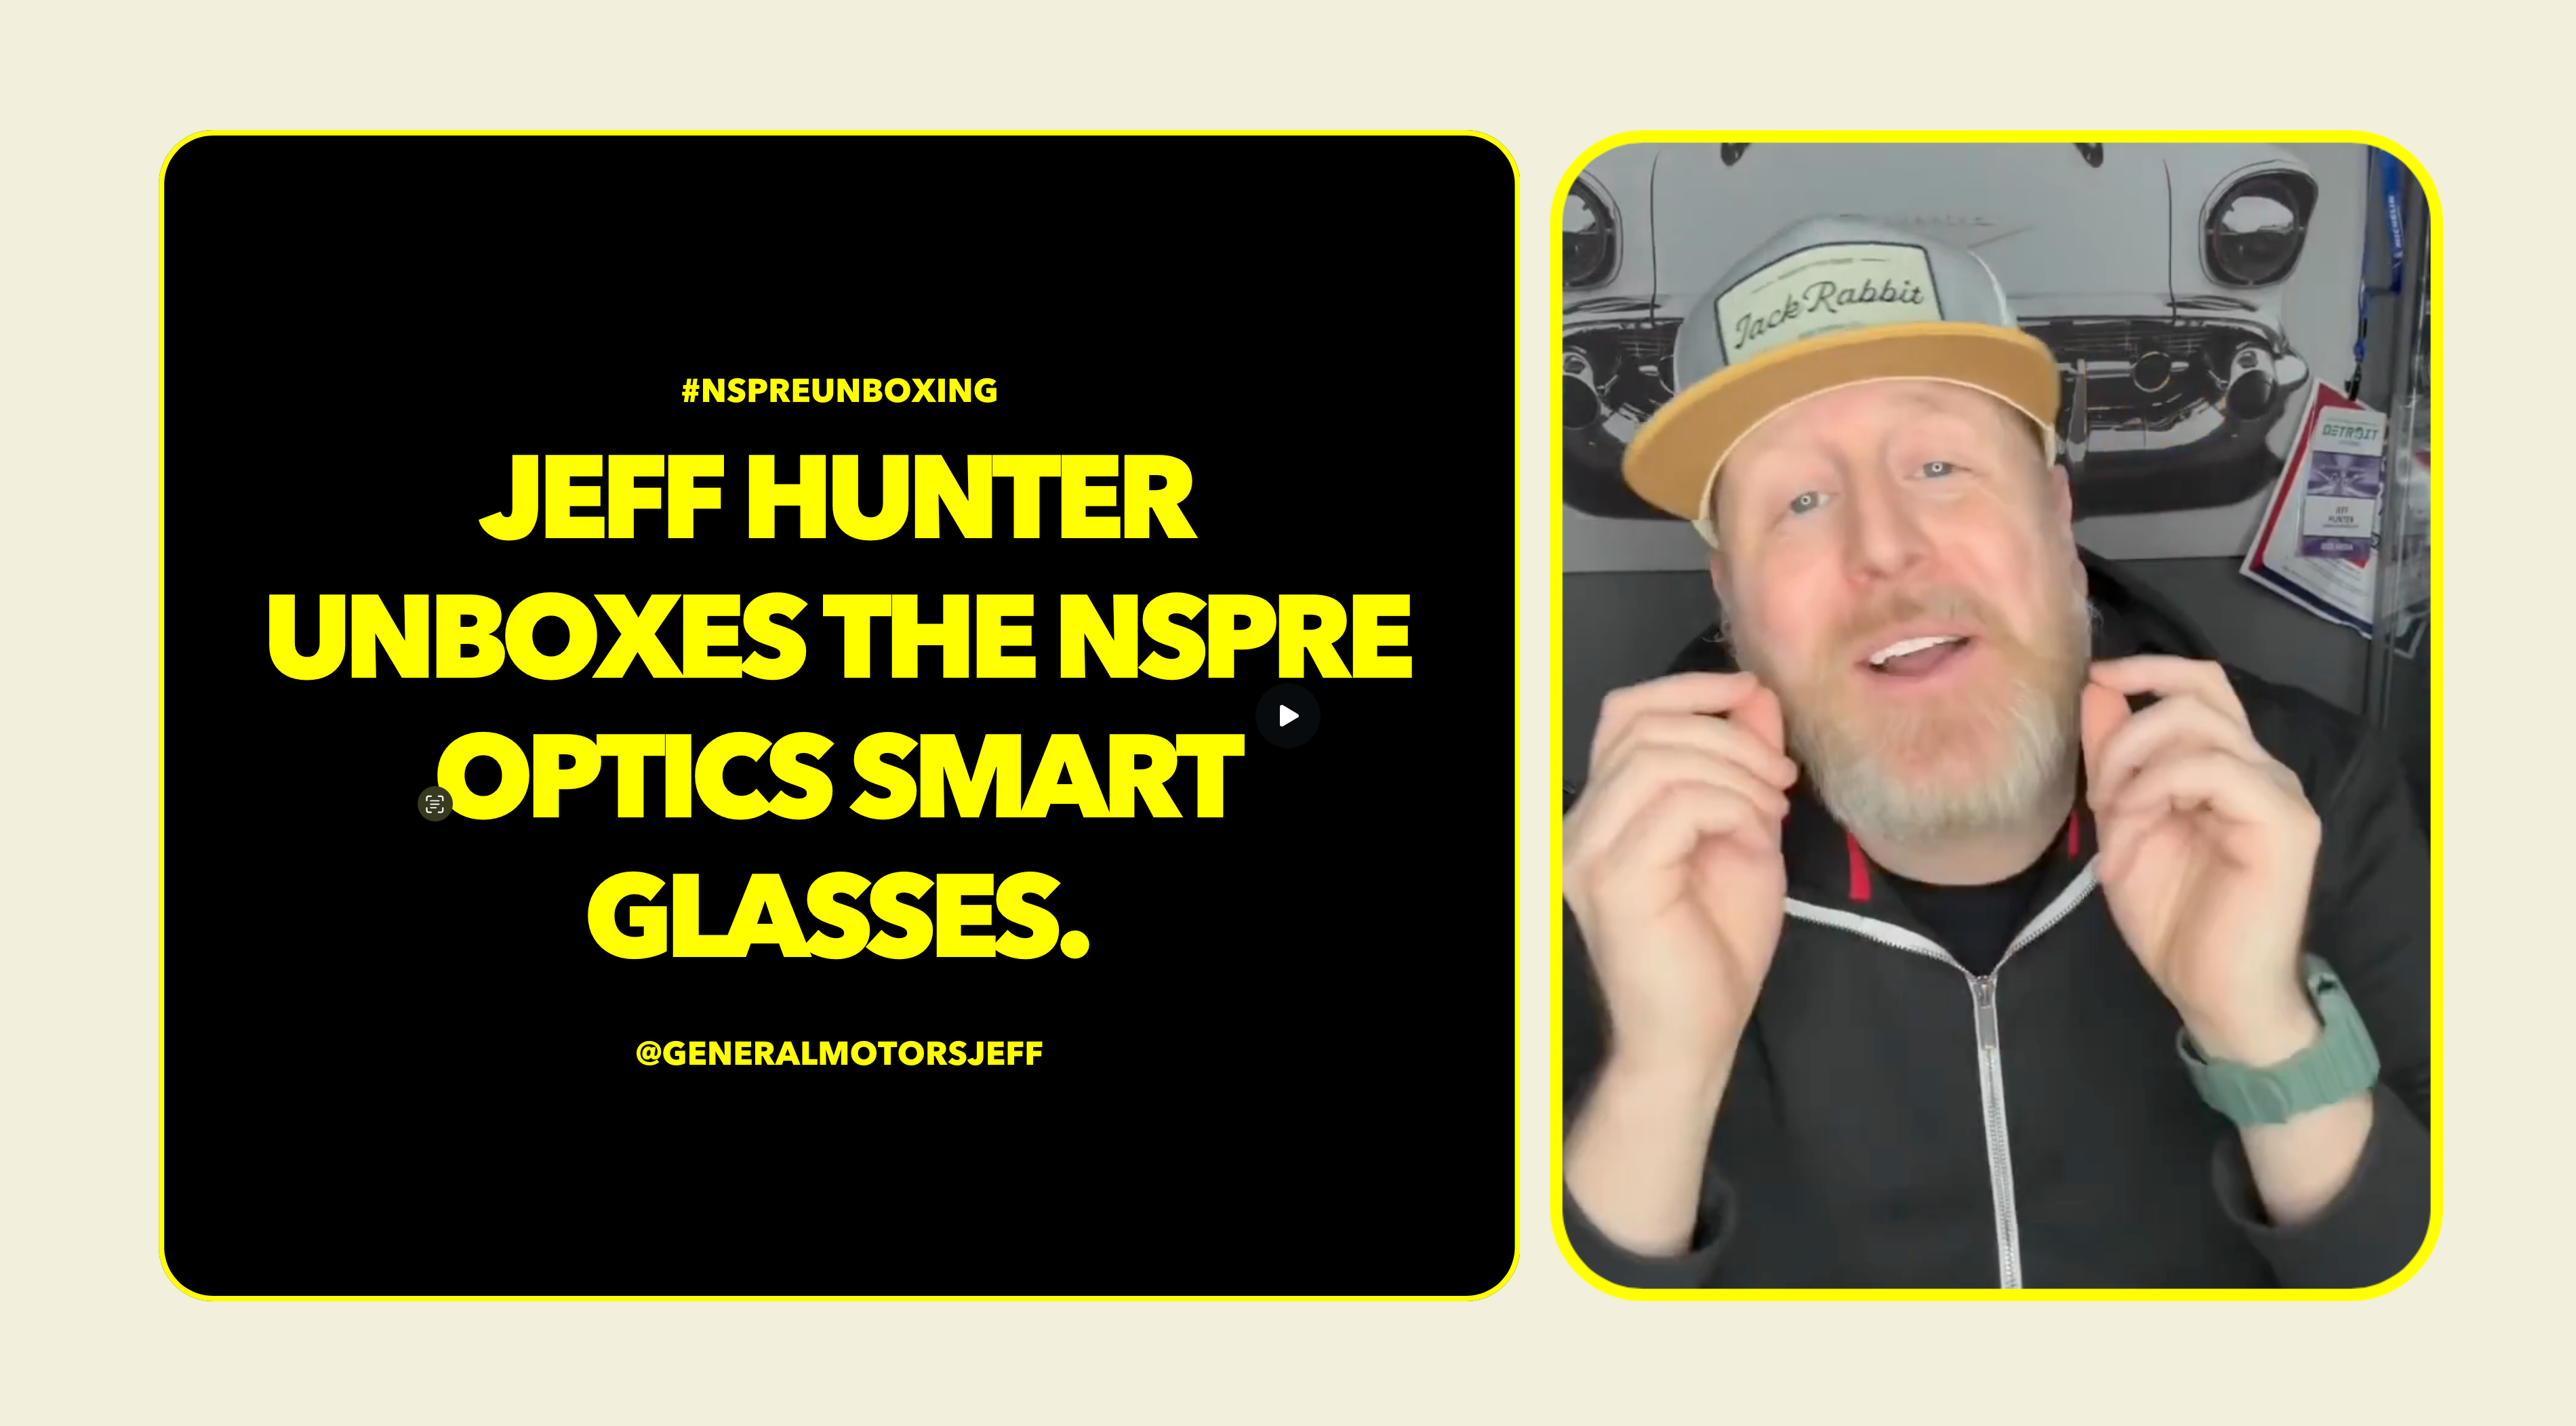 Load video: Jeff Hunter, General Motors Jeff unboxes NSPRE Smart Glasses